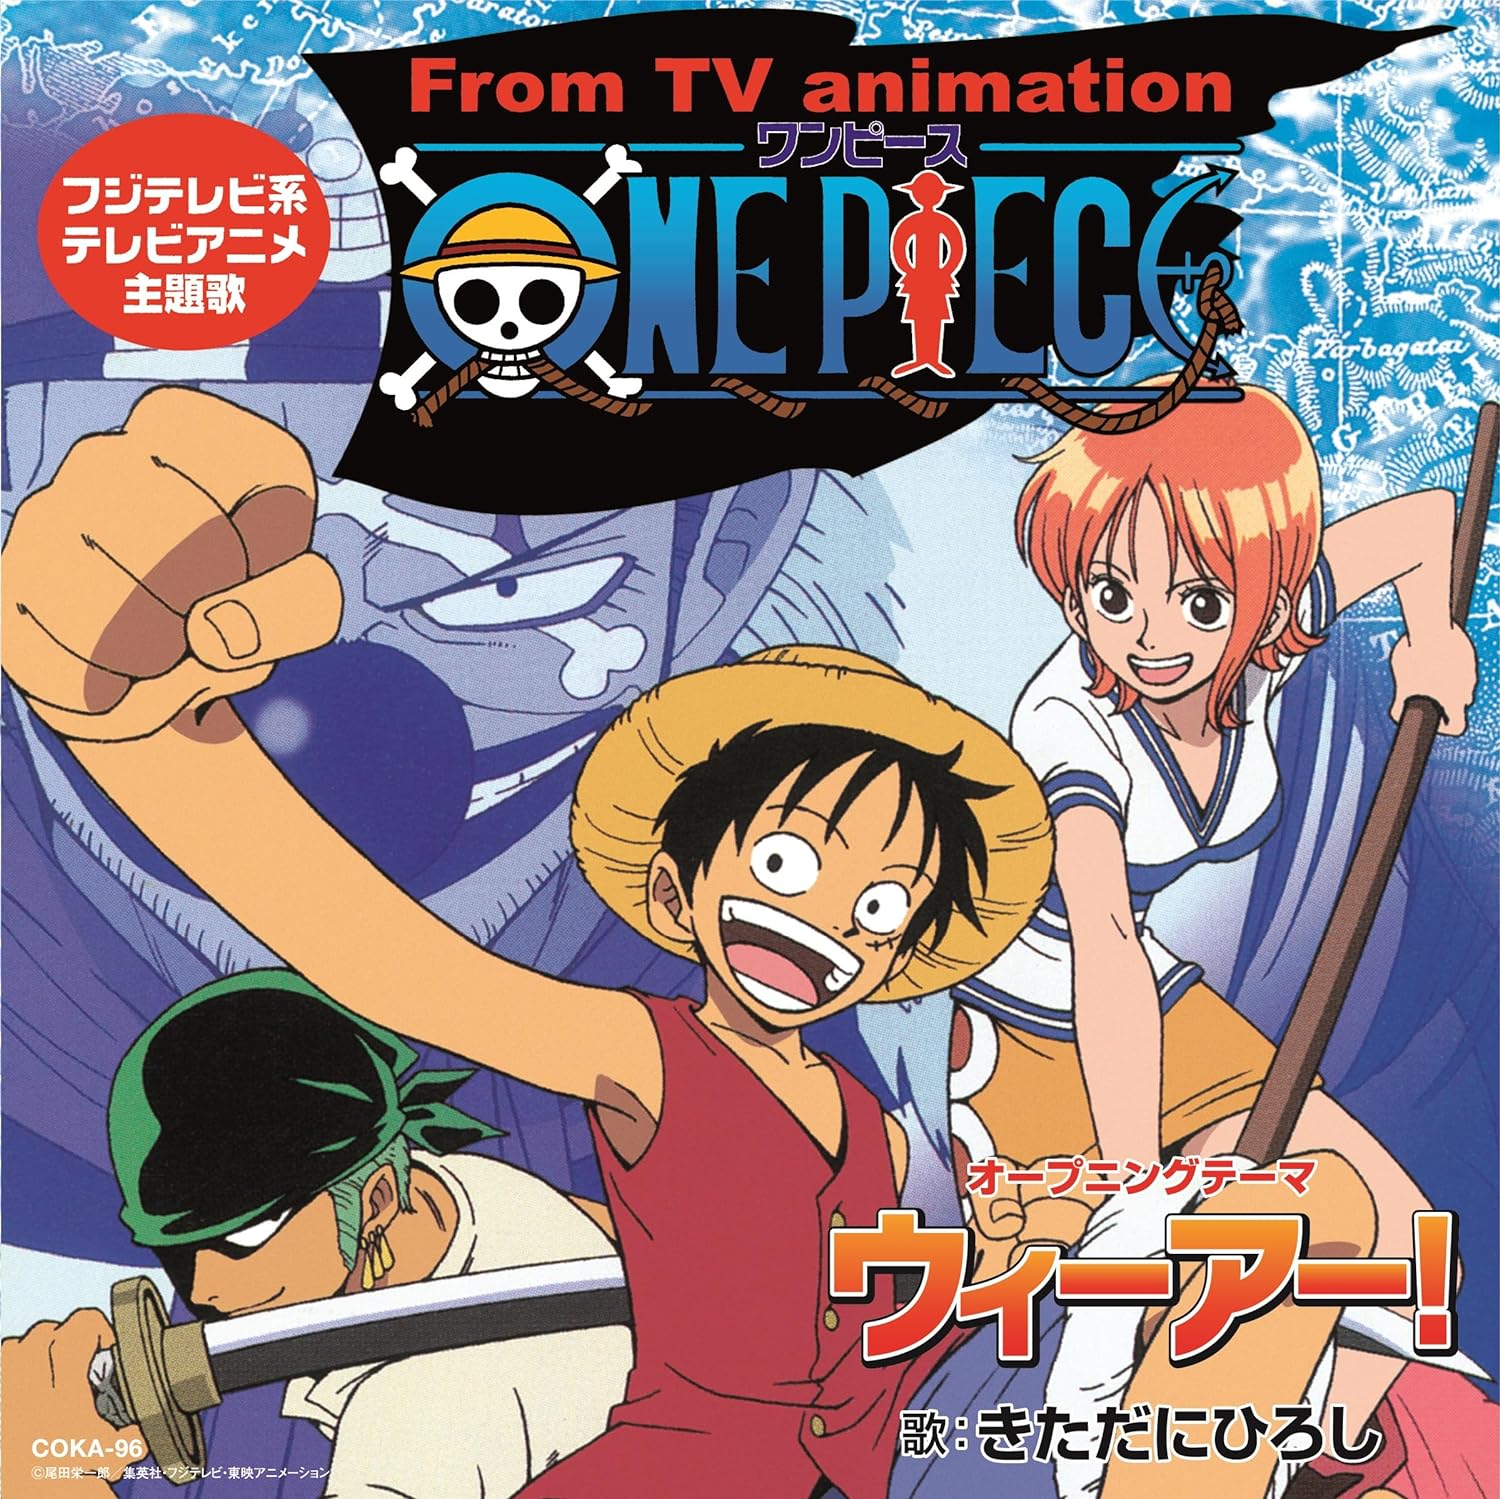 SOUNDTRACK CD Anime TV Music Attack on Titan Shingeki no Kyojin Character  song 7